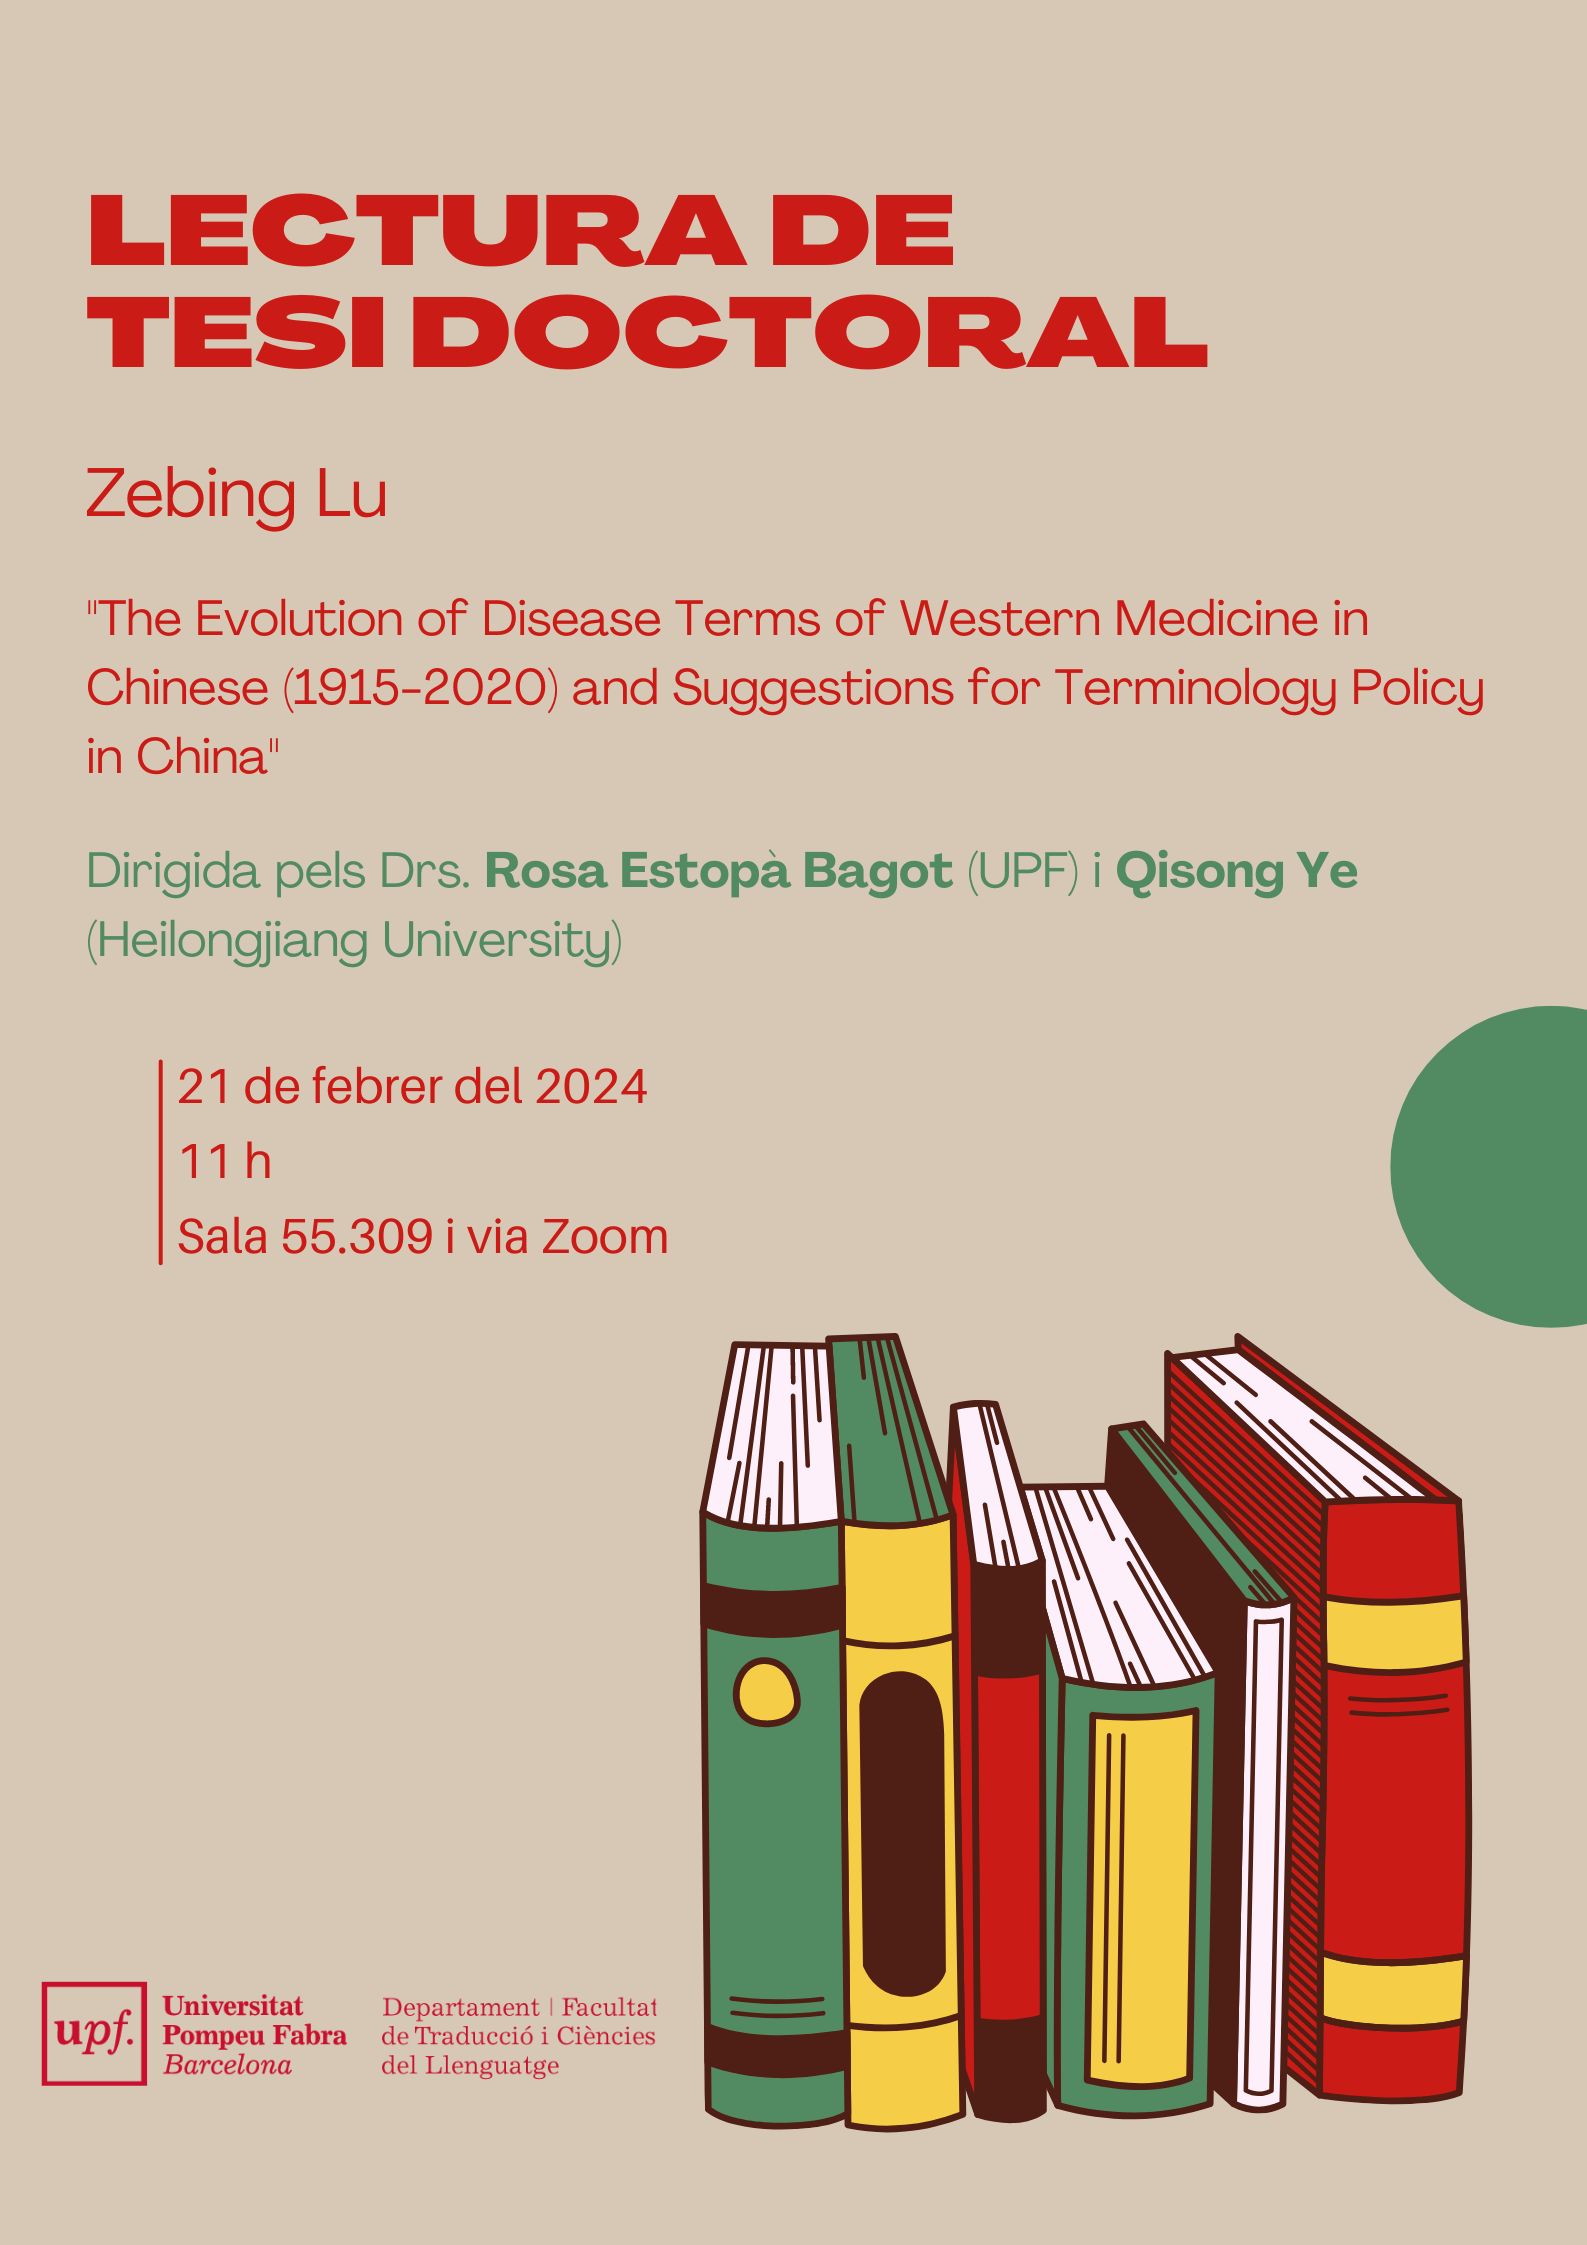 21/02/2023 Acte de lectura de la tesi doctoral de Zebing, a les 11.00 hores